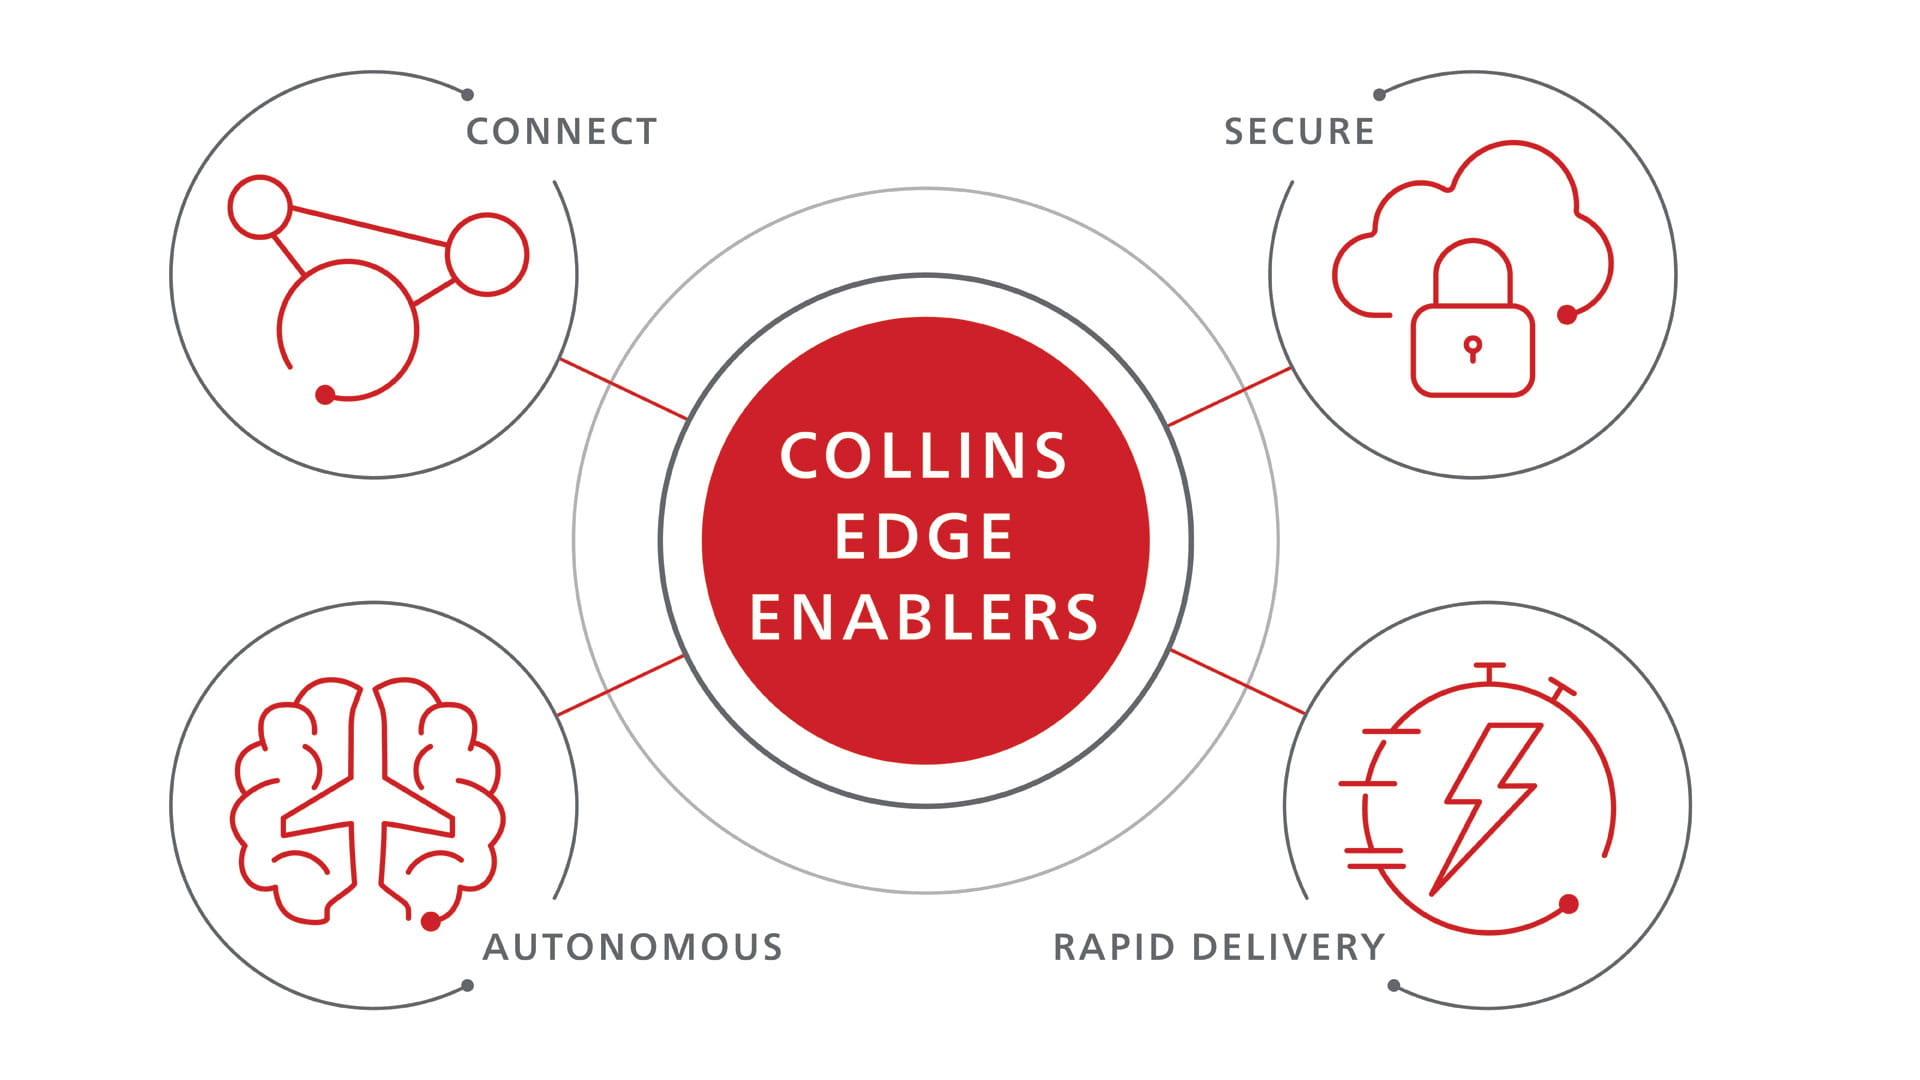 Depiction of Collins edge enablers: Connect, Secure, Autonomous, and Rapid delivery